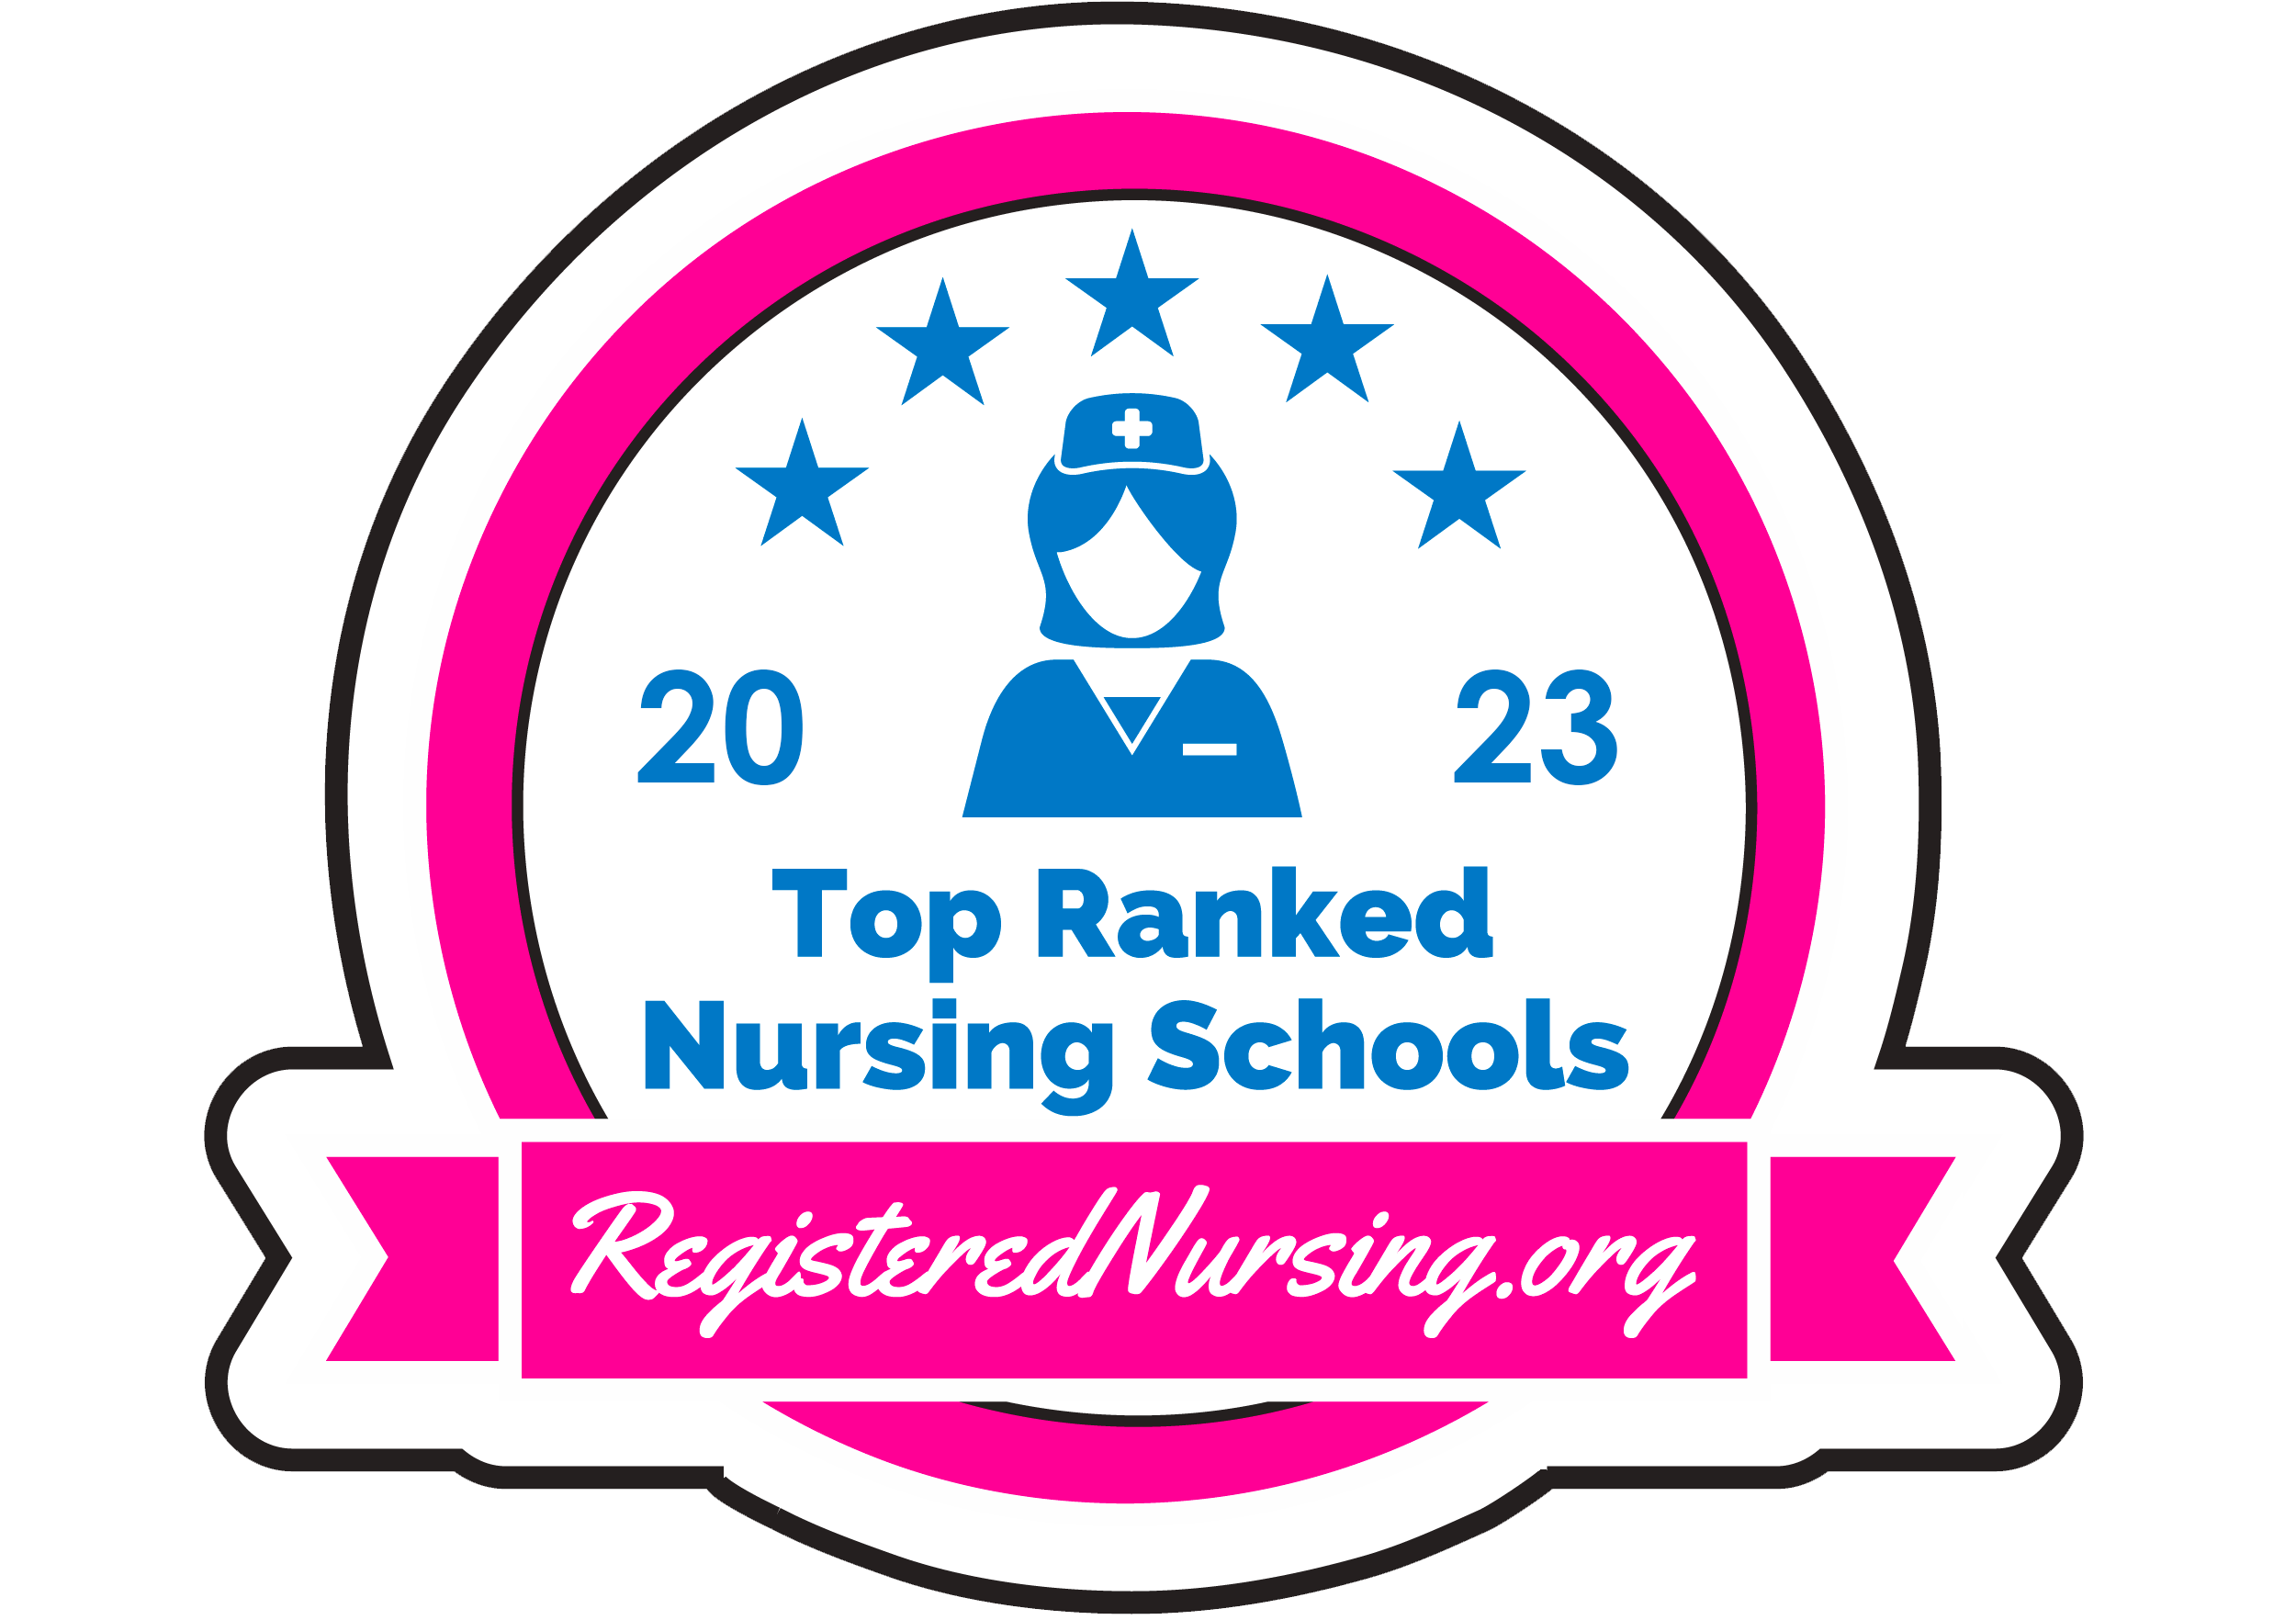 Top Ranked Nursing Schools